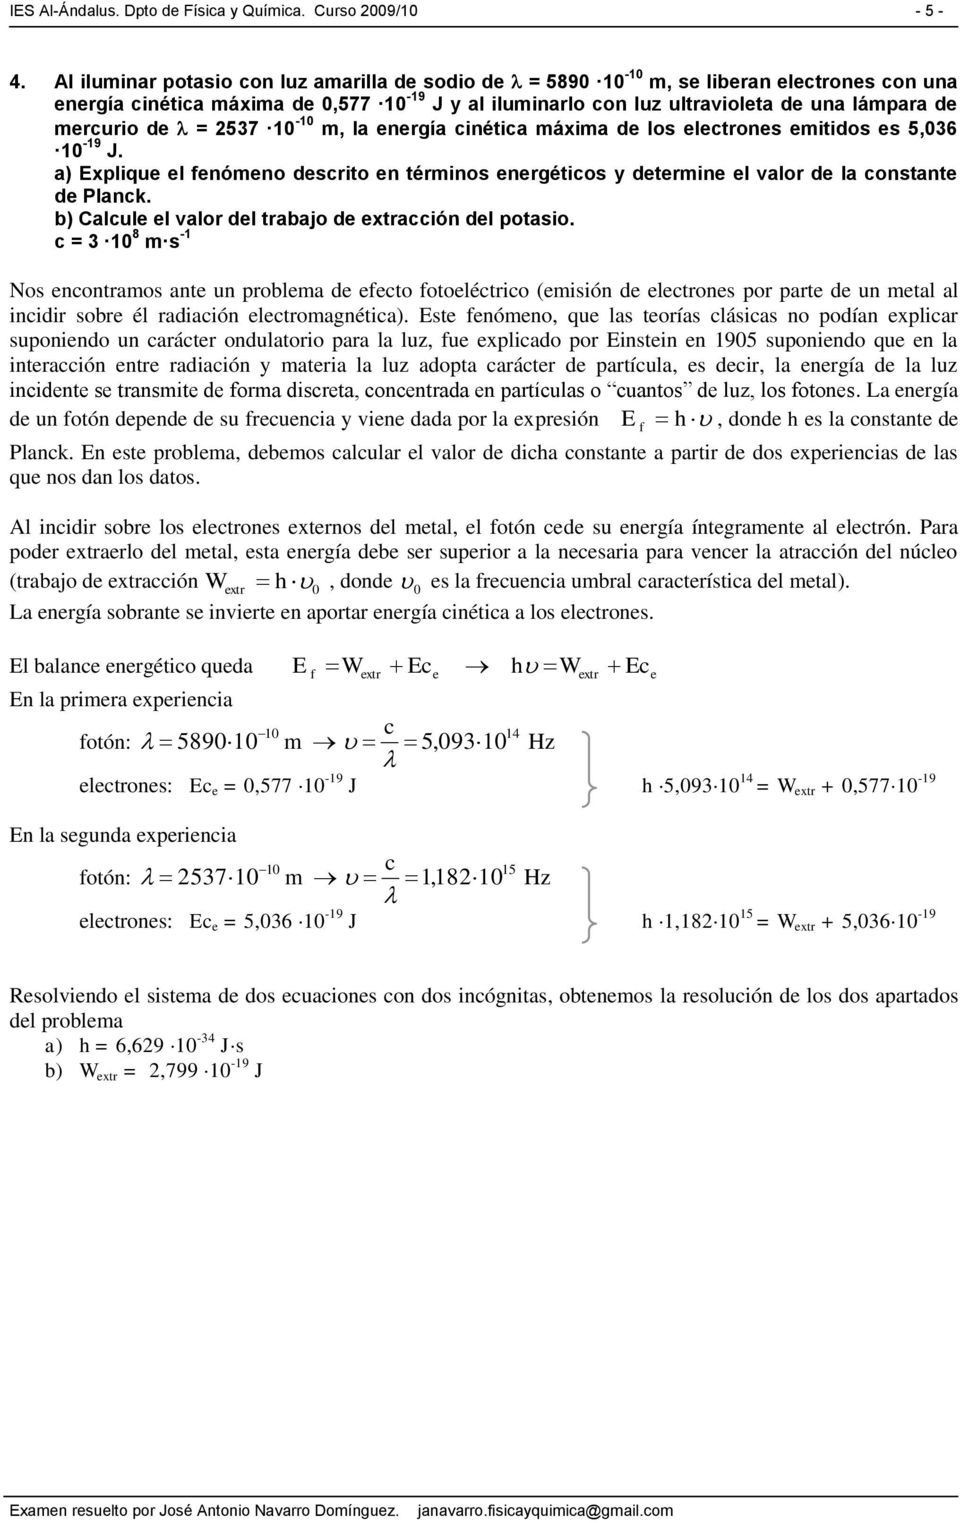 cinética máxima d los lctrons mitidos s 5,36-9 J. a) Expliqu l fnómno dscrito n términos nrgéticos y dtrmin l valor d la constant d Planck. b) Calcul l valor dl trabajo d xtracción dl potasio.